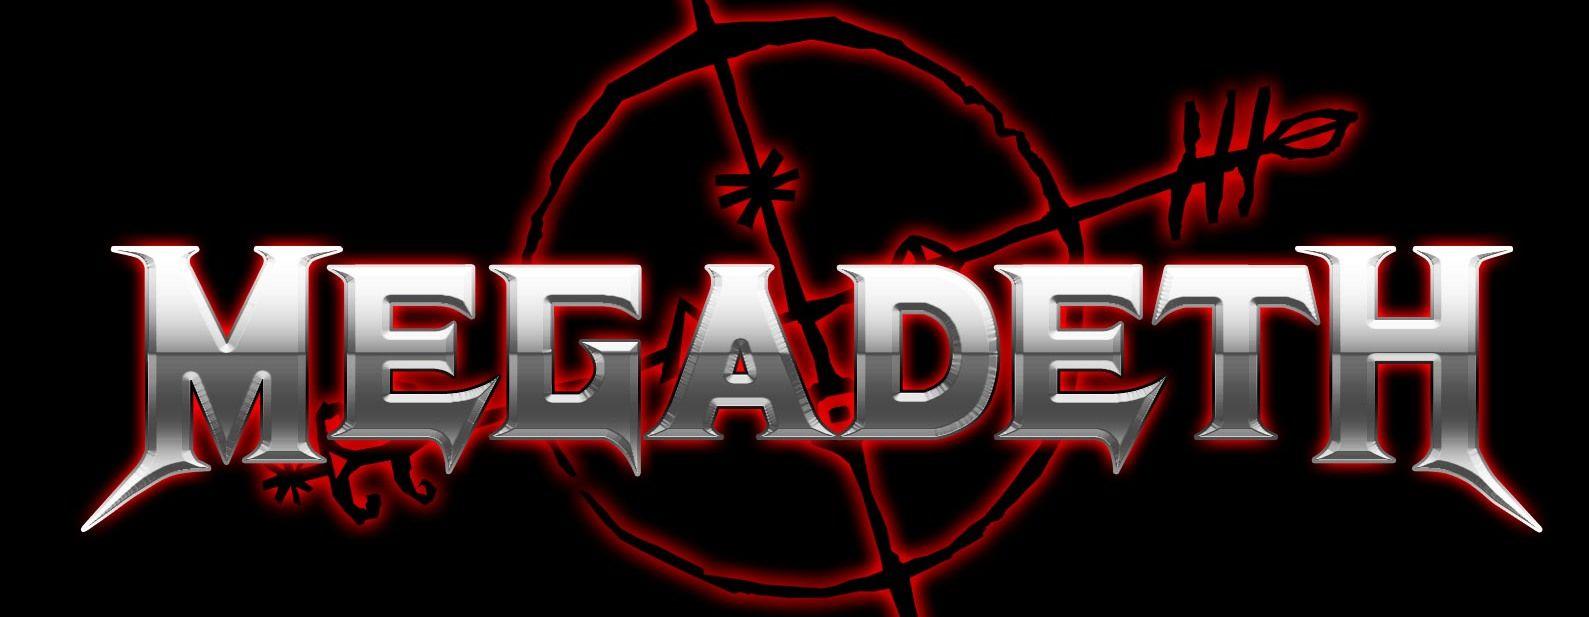 Megadeth Logo - Megadeth Logo. Best Rock Musical. WordPress Music Blog